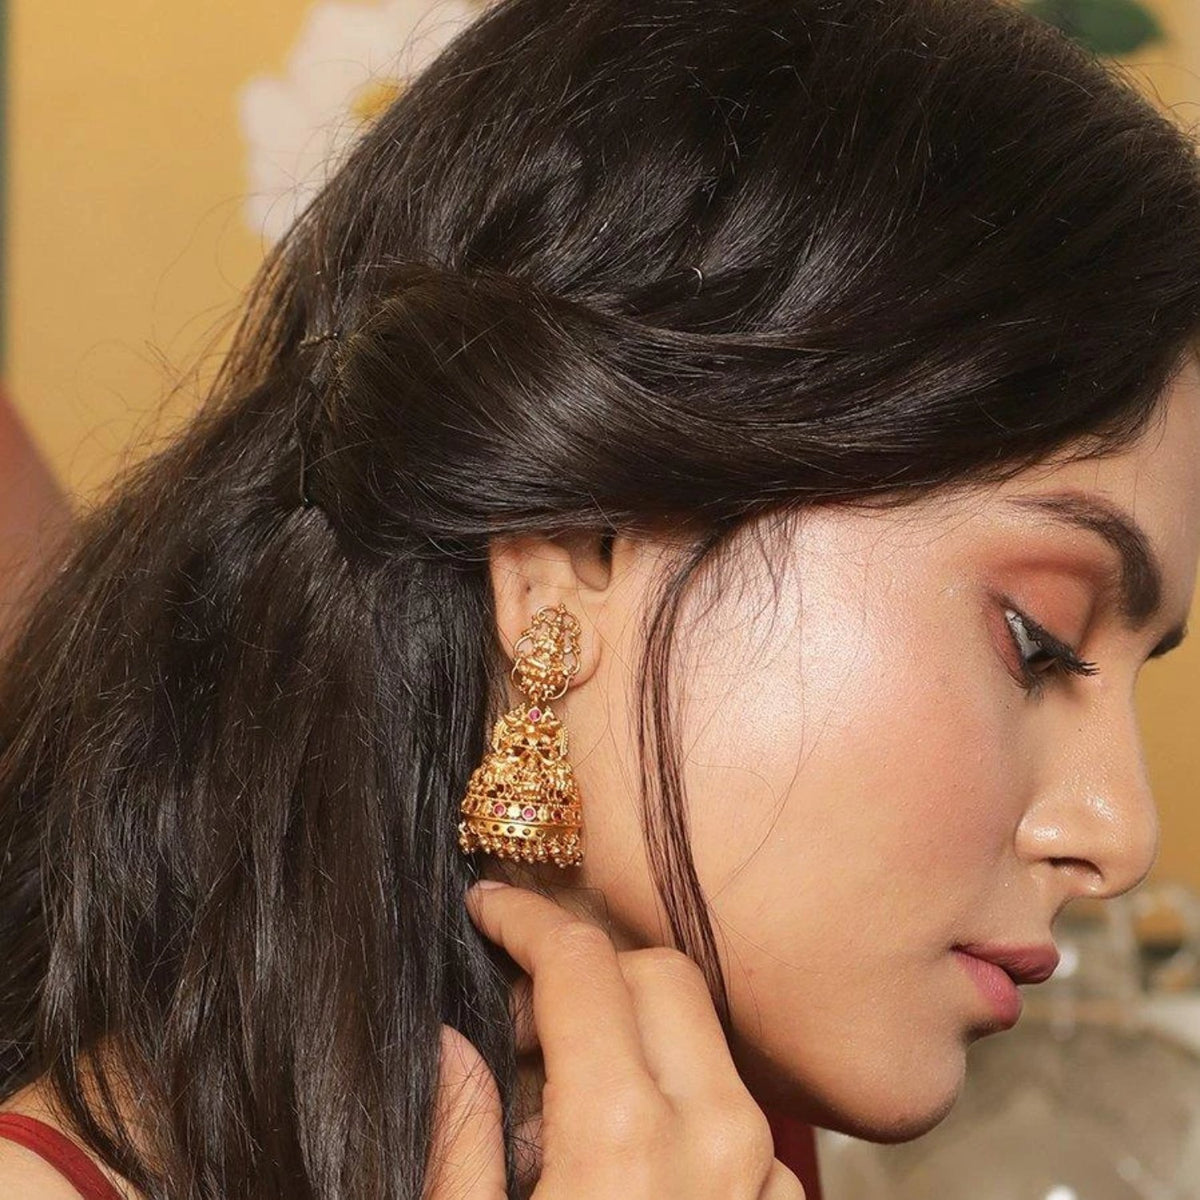 Aachal Antique Jhumka Earrings